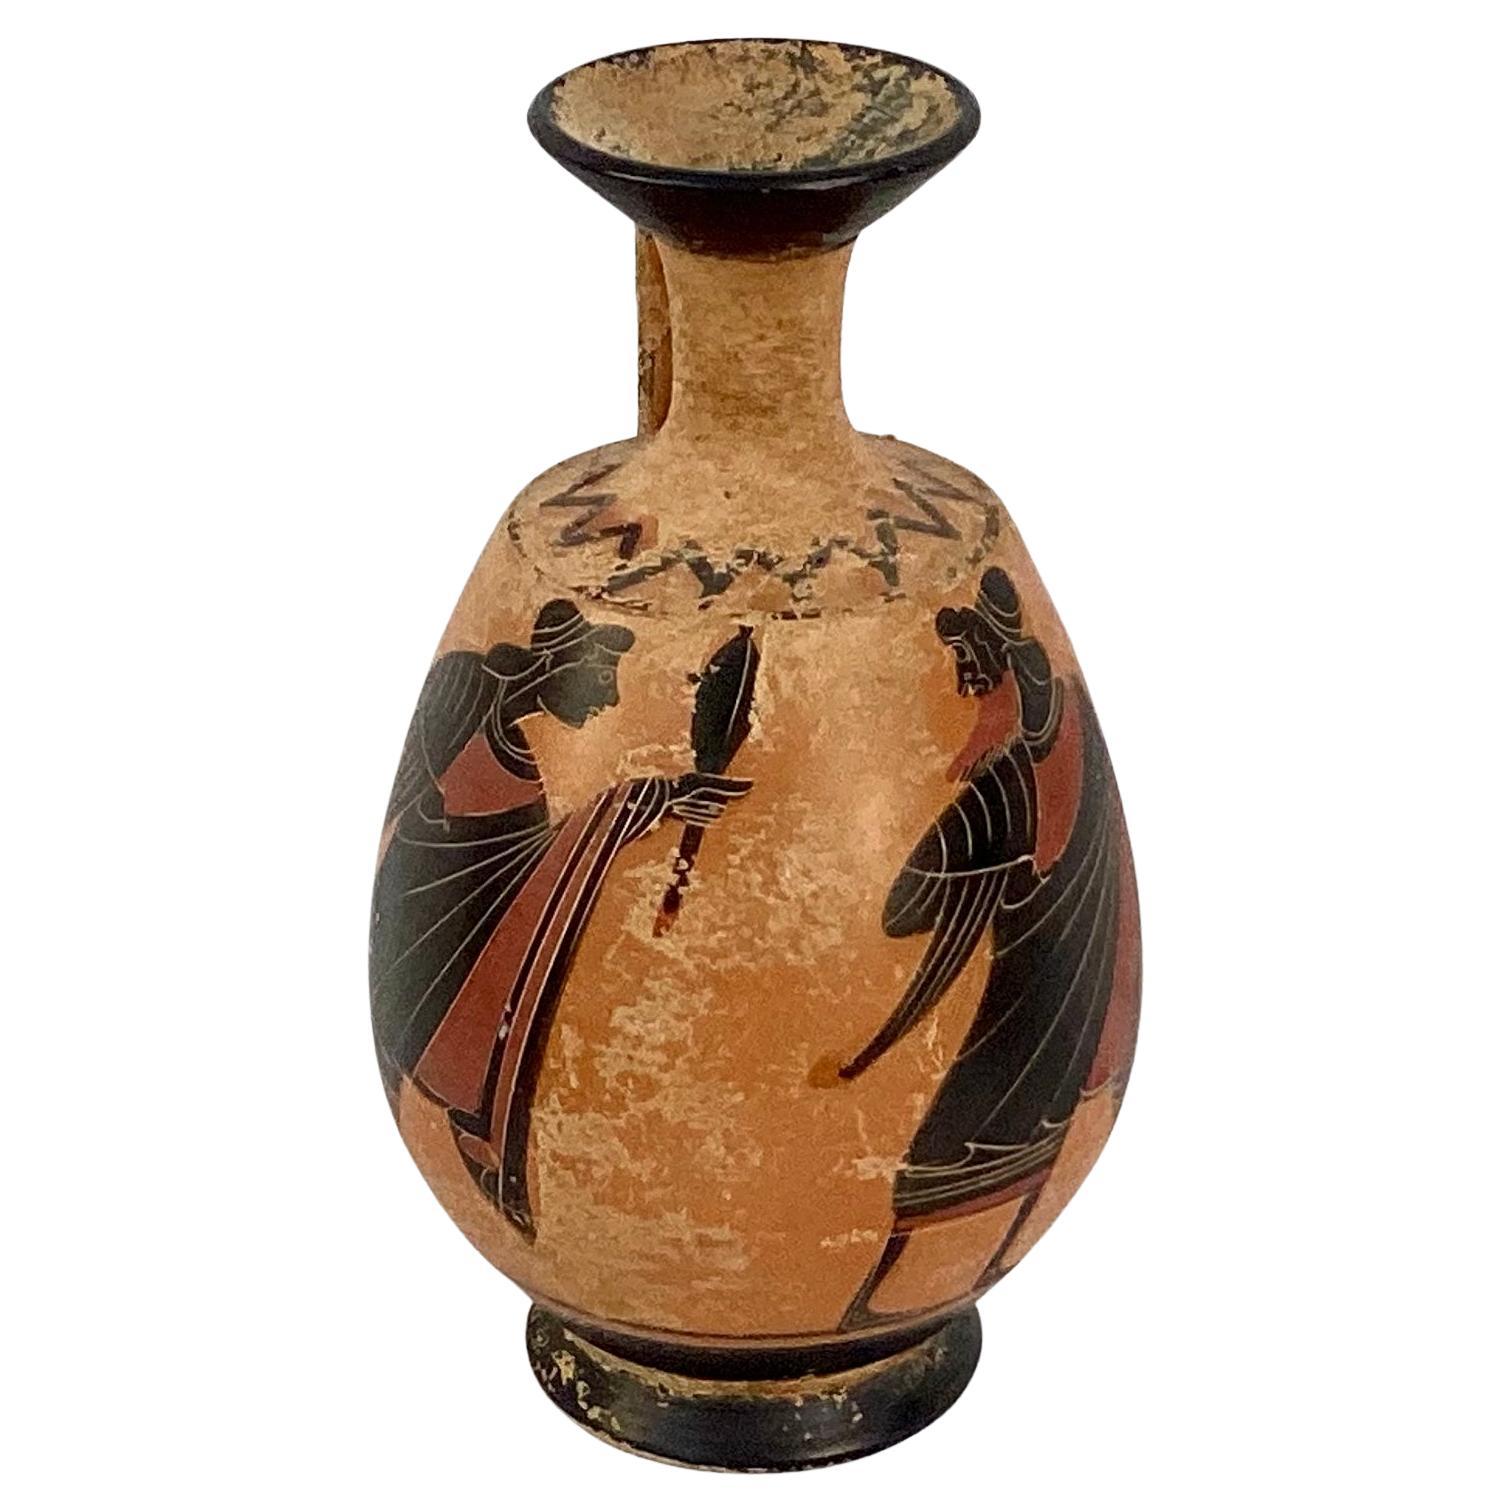 Griechischer Grand Tour-Keramik-Krug aus dem 19. Jahrhundert